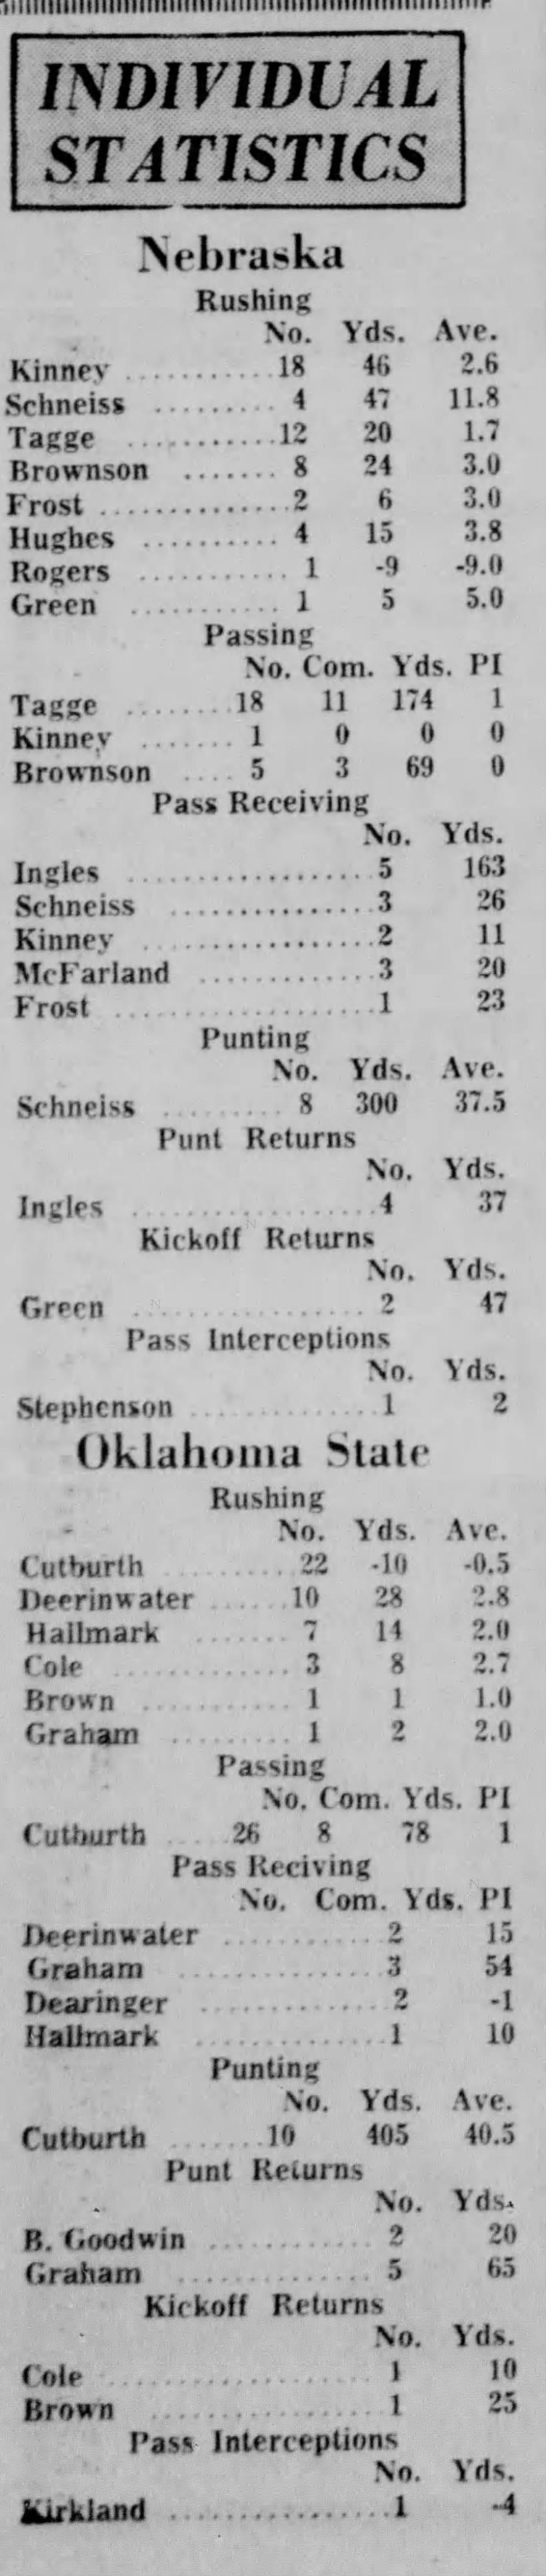 1969 Nebraska-Oklahoma State football game stats